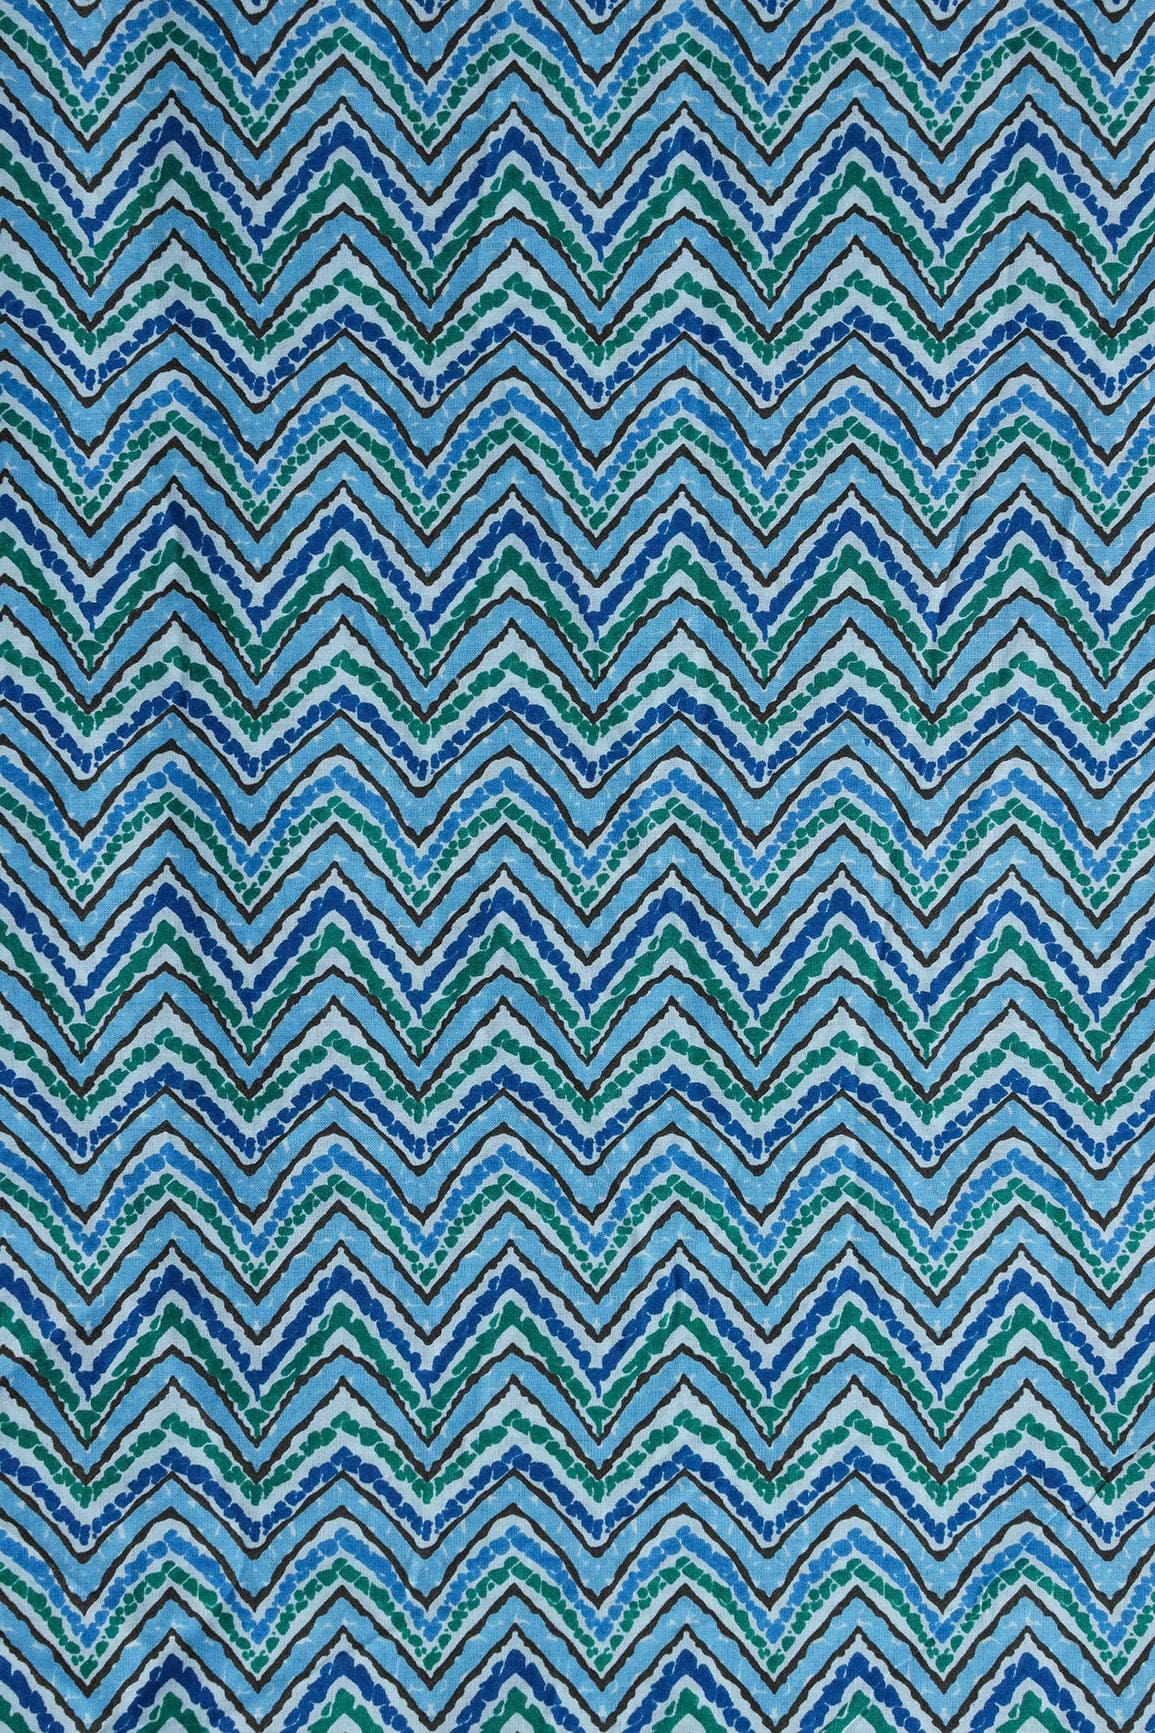 doeraa Prints Green And Carolina Blue Chevron Print On Pure Mul Cotton Fabric